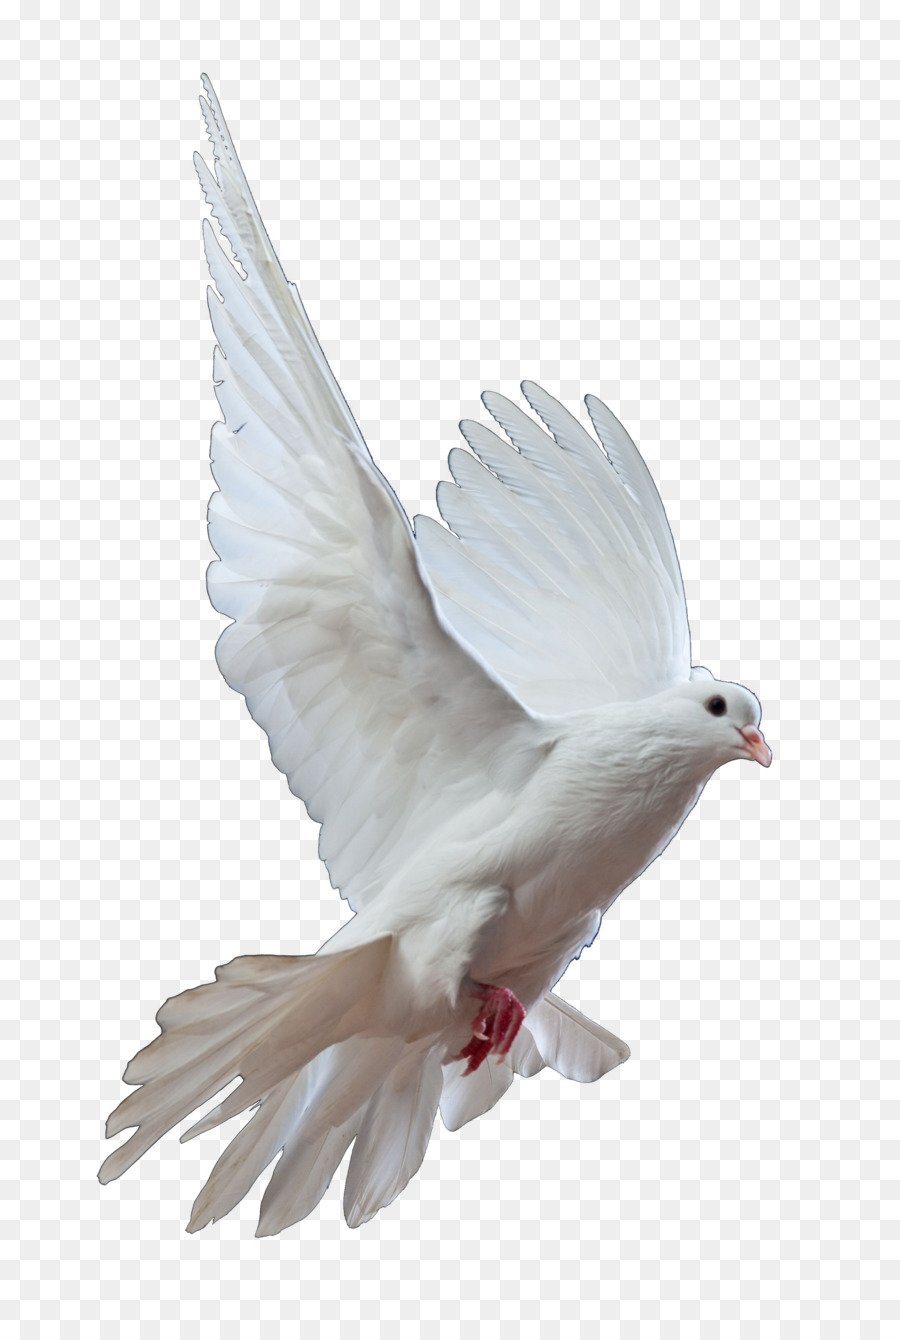 Homing pigeon Vogel Columbidae Tauben als Symbole Release Taube - Möve